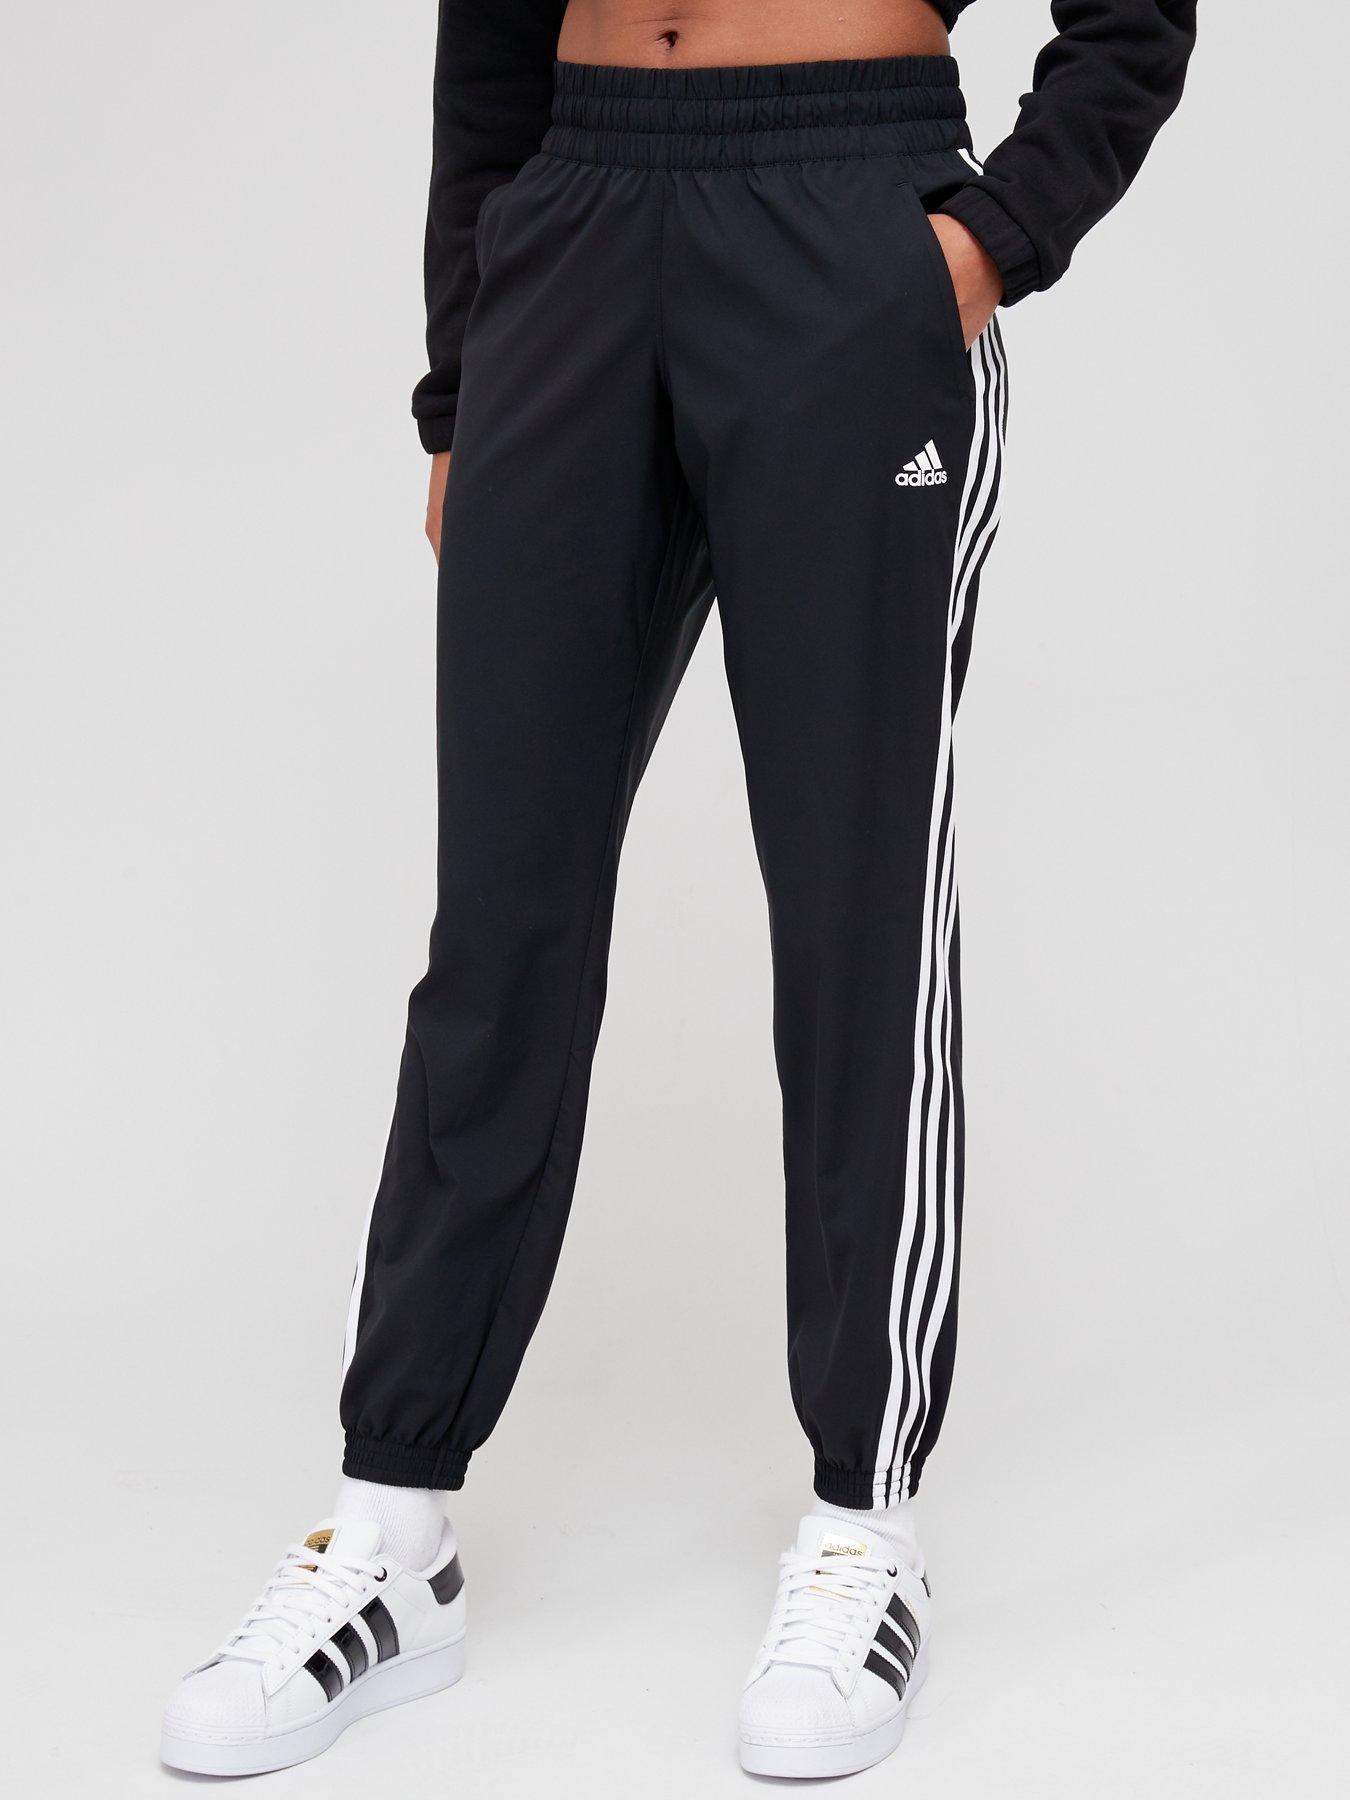 Long pants adidas Women 3 Stripes Black-White - Fútbol Emotion